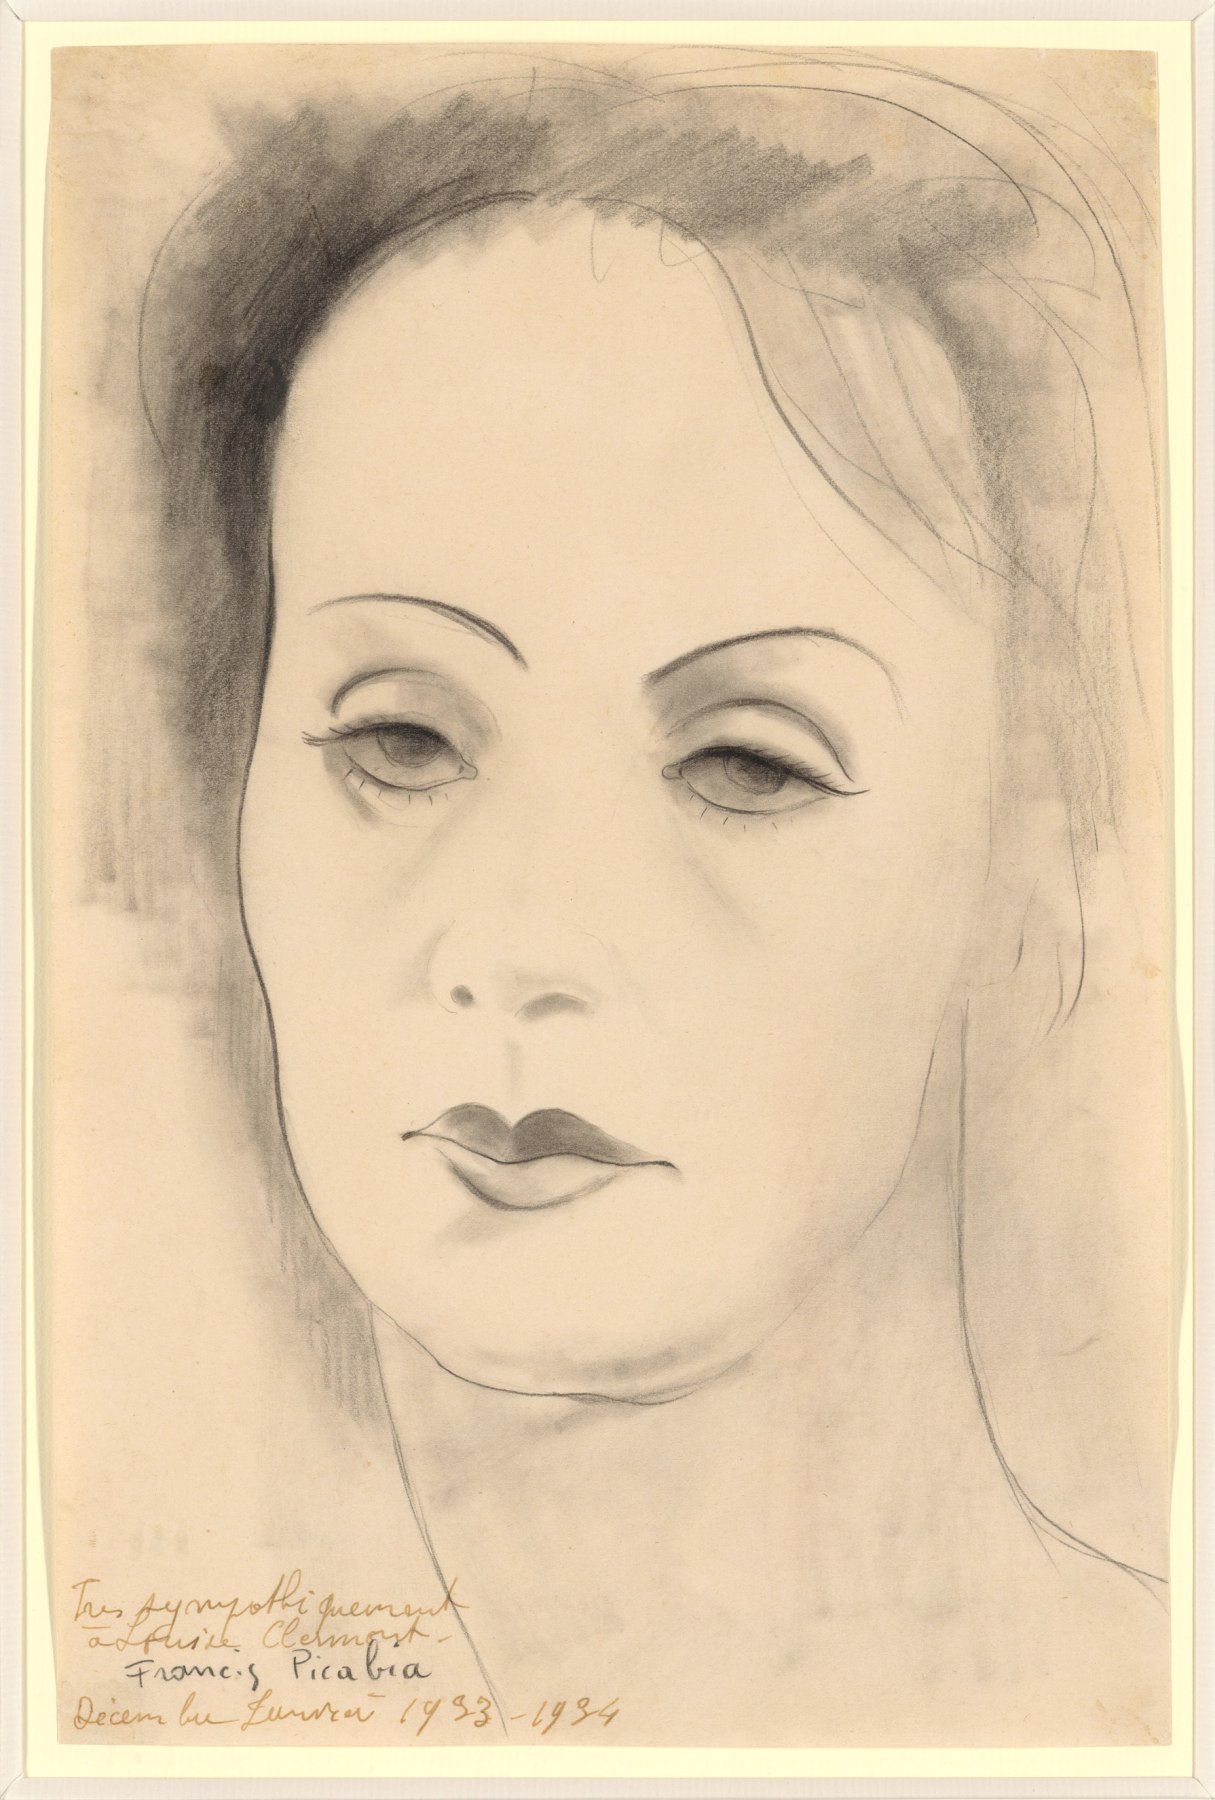 Francis Picabia

&amp;ldquo;Untitled (Portrait de Greta Garbo)&amp;rdquo;, ca. 1933&amp;ndash;1934

Pencil on paper

11 1/2 x 7 1/2 inches

29.5 x 19.5 cm

PIZ 161
$160,000